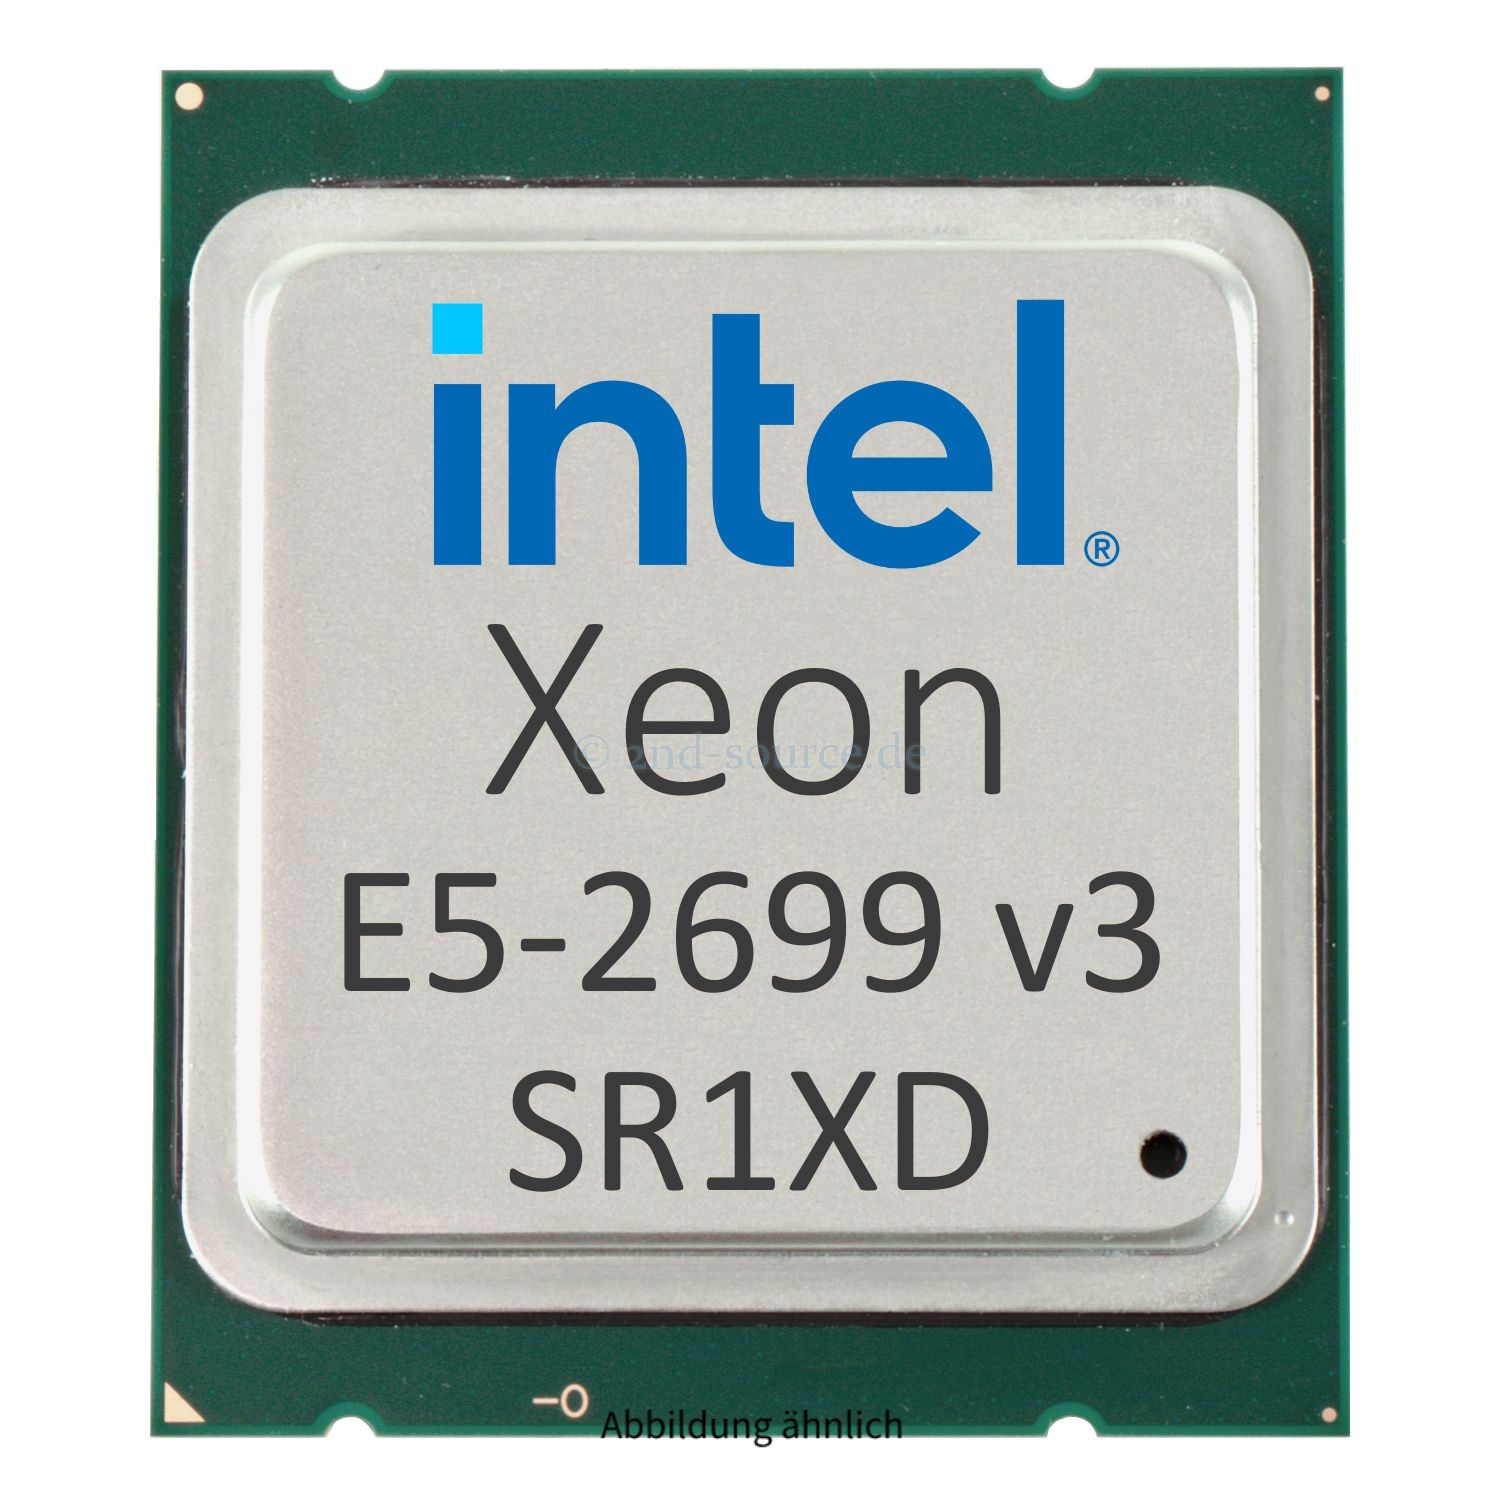 Intel Xeon E5-2699 v3 2.30GHz 45MB 18-Core CPU 145W SR1XD CM8064401739300